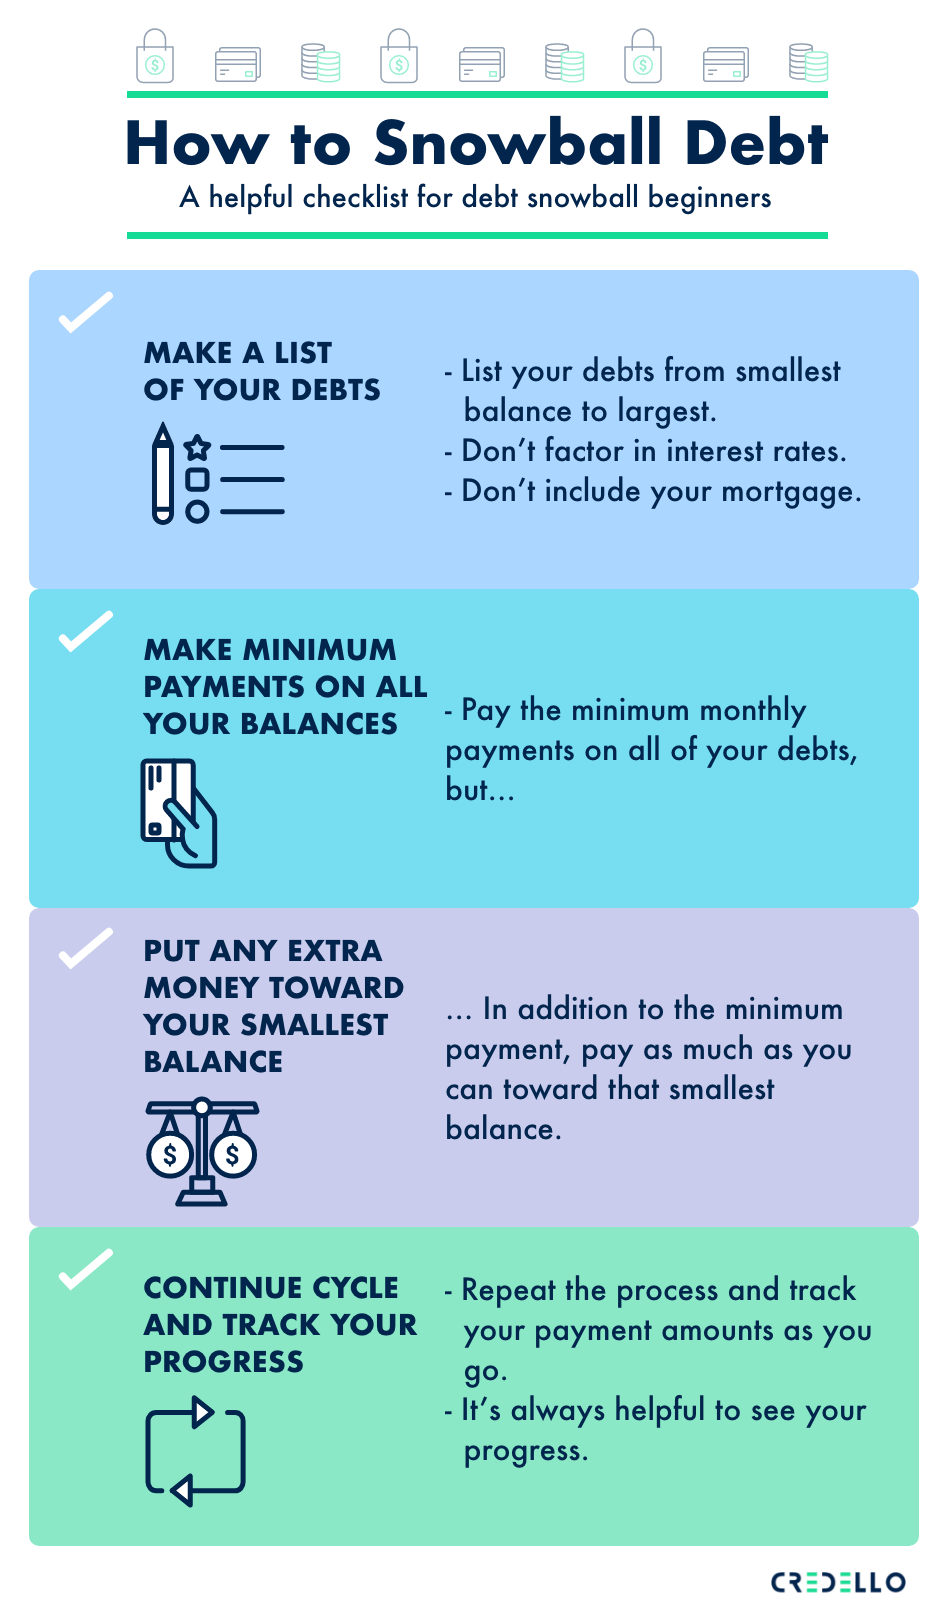 How To Snowball Debt 2021 Checklist Credello